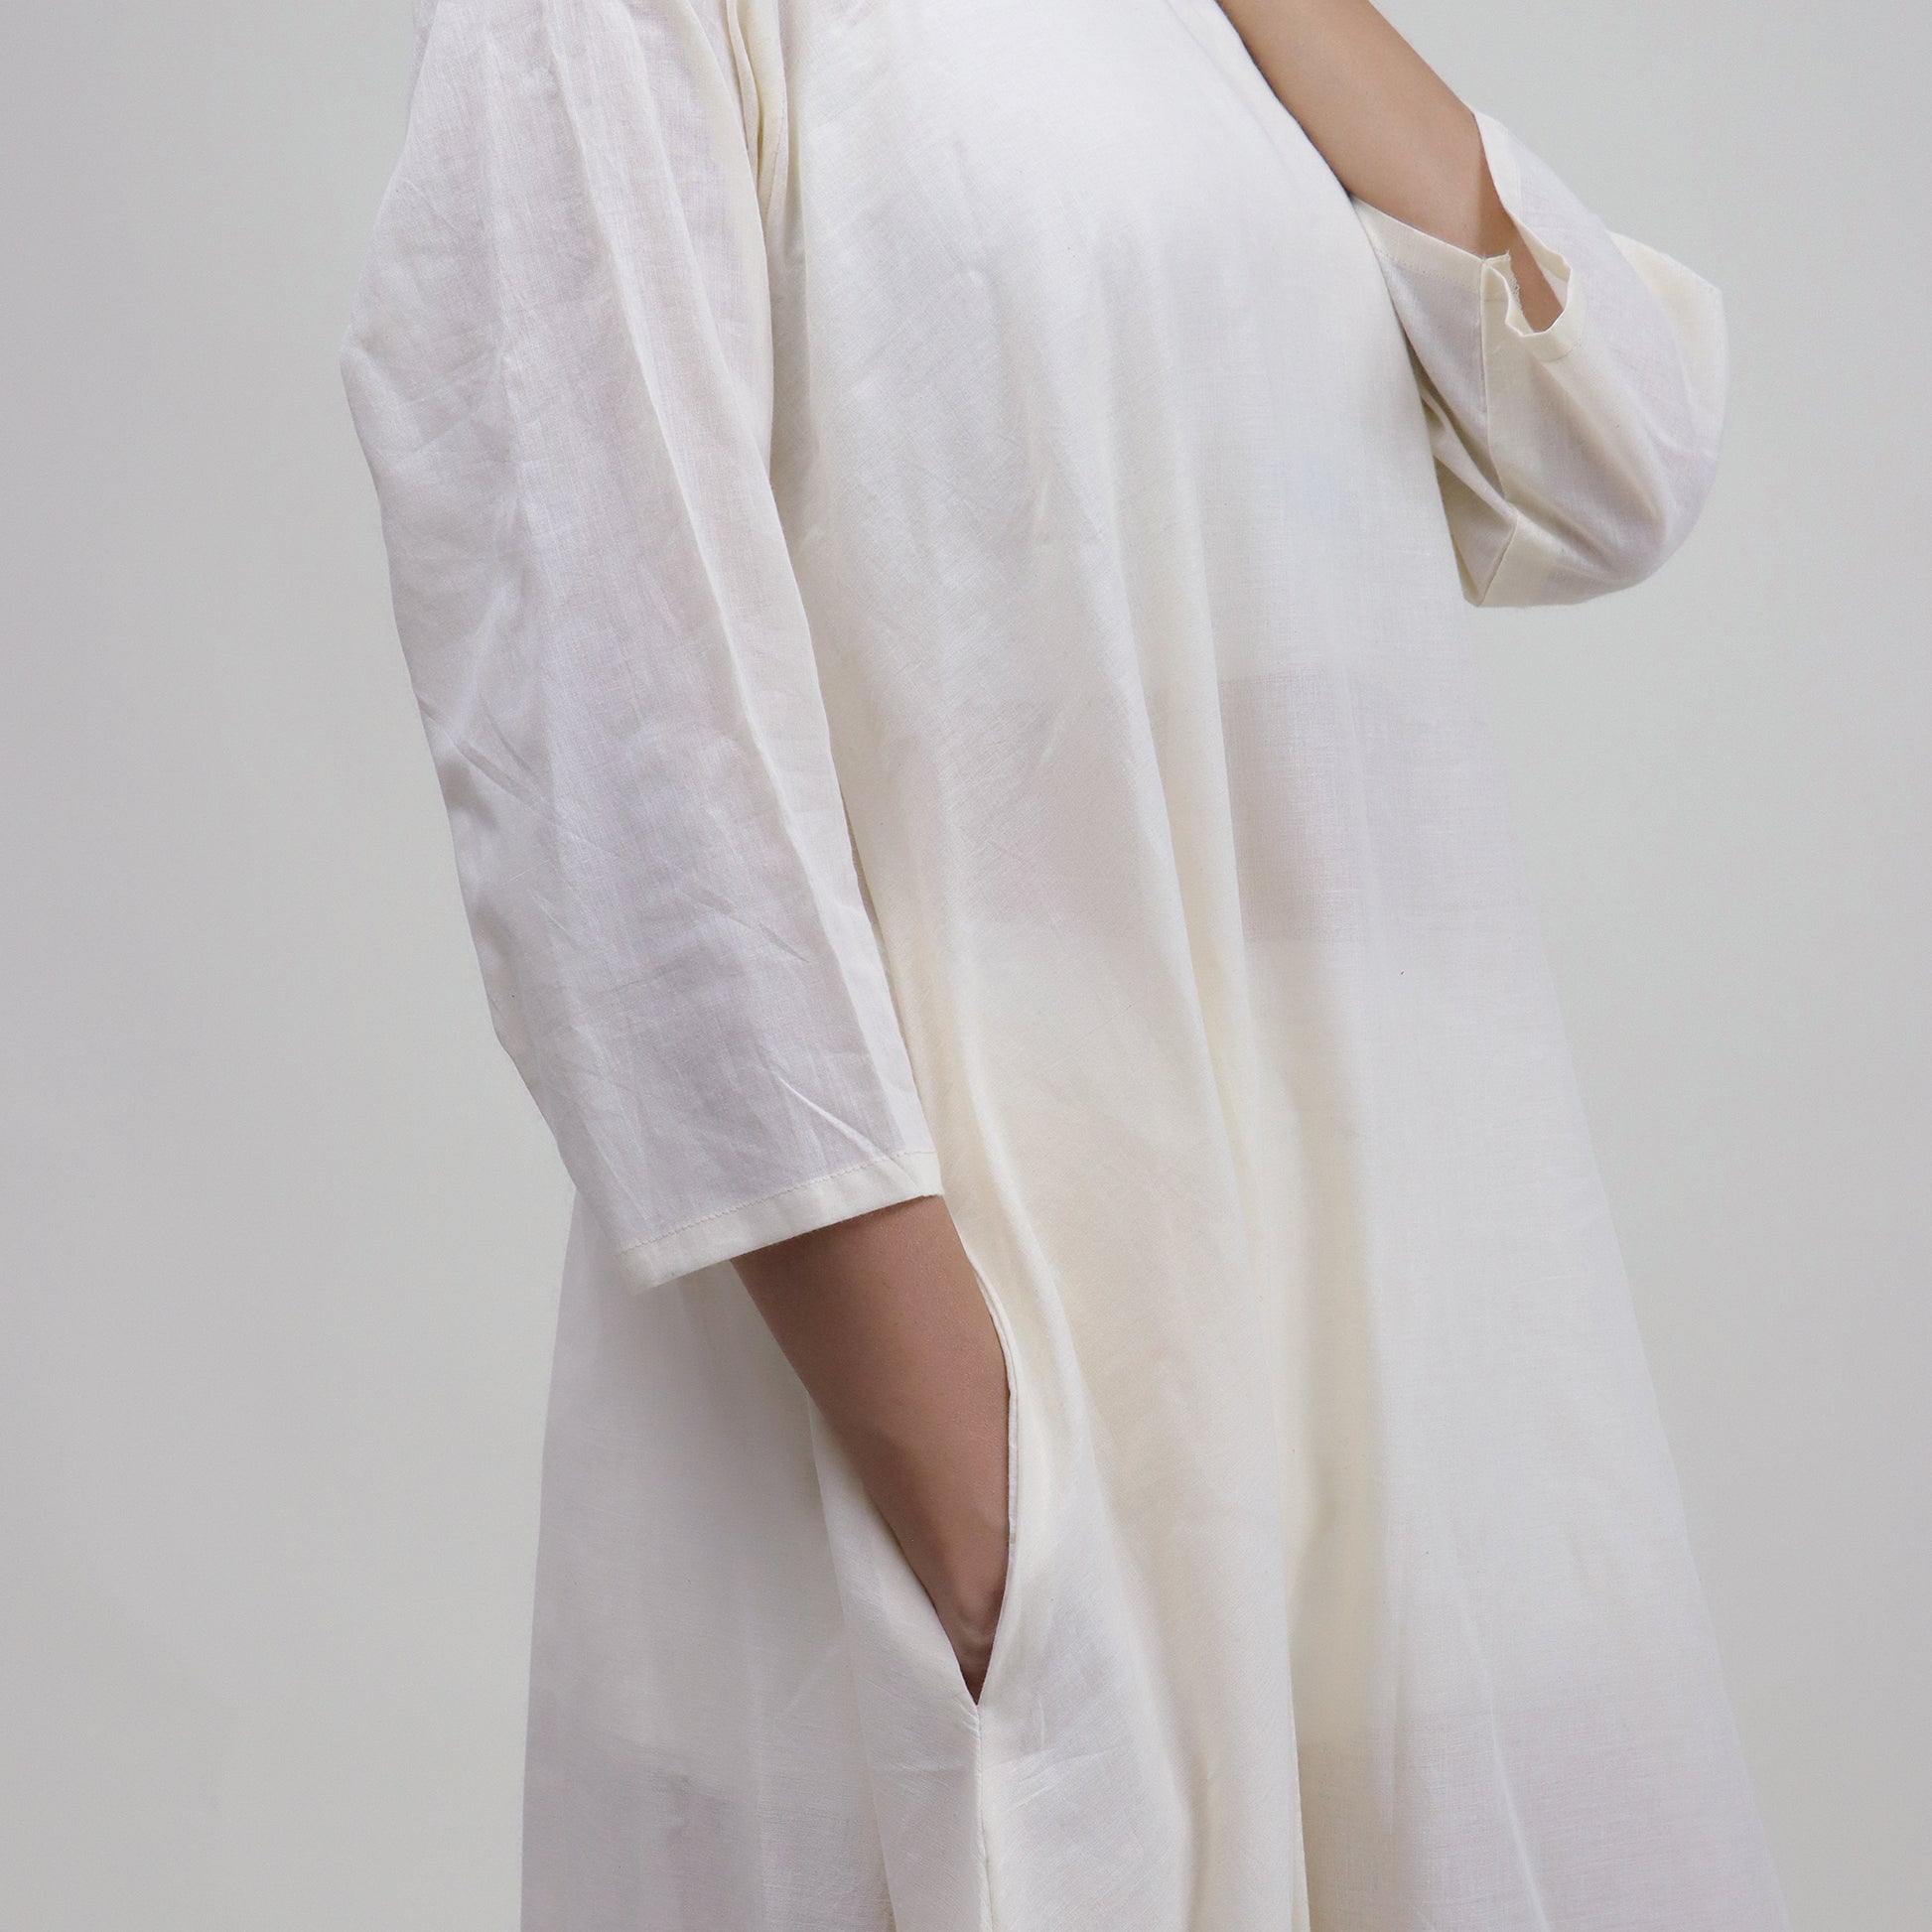 Off White Solid Round Neck Womens Kaftan Dress Online